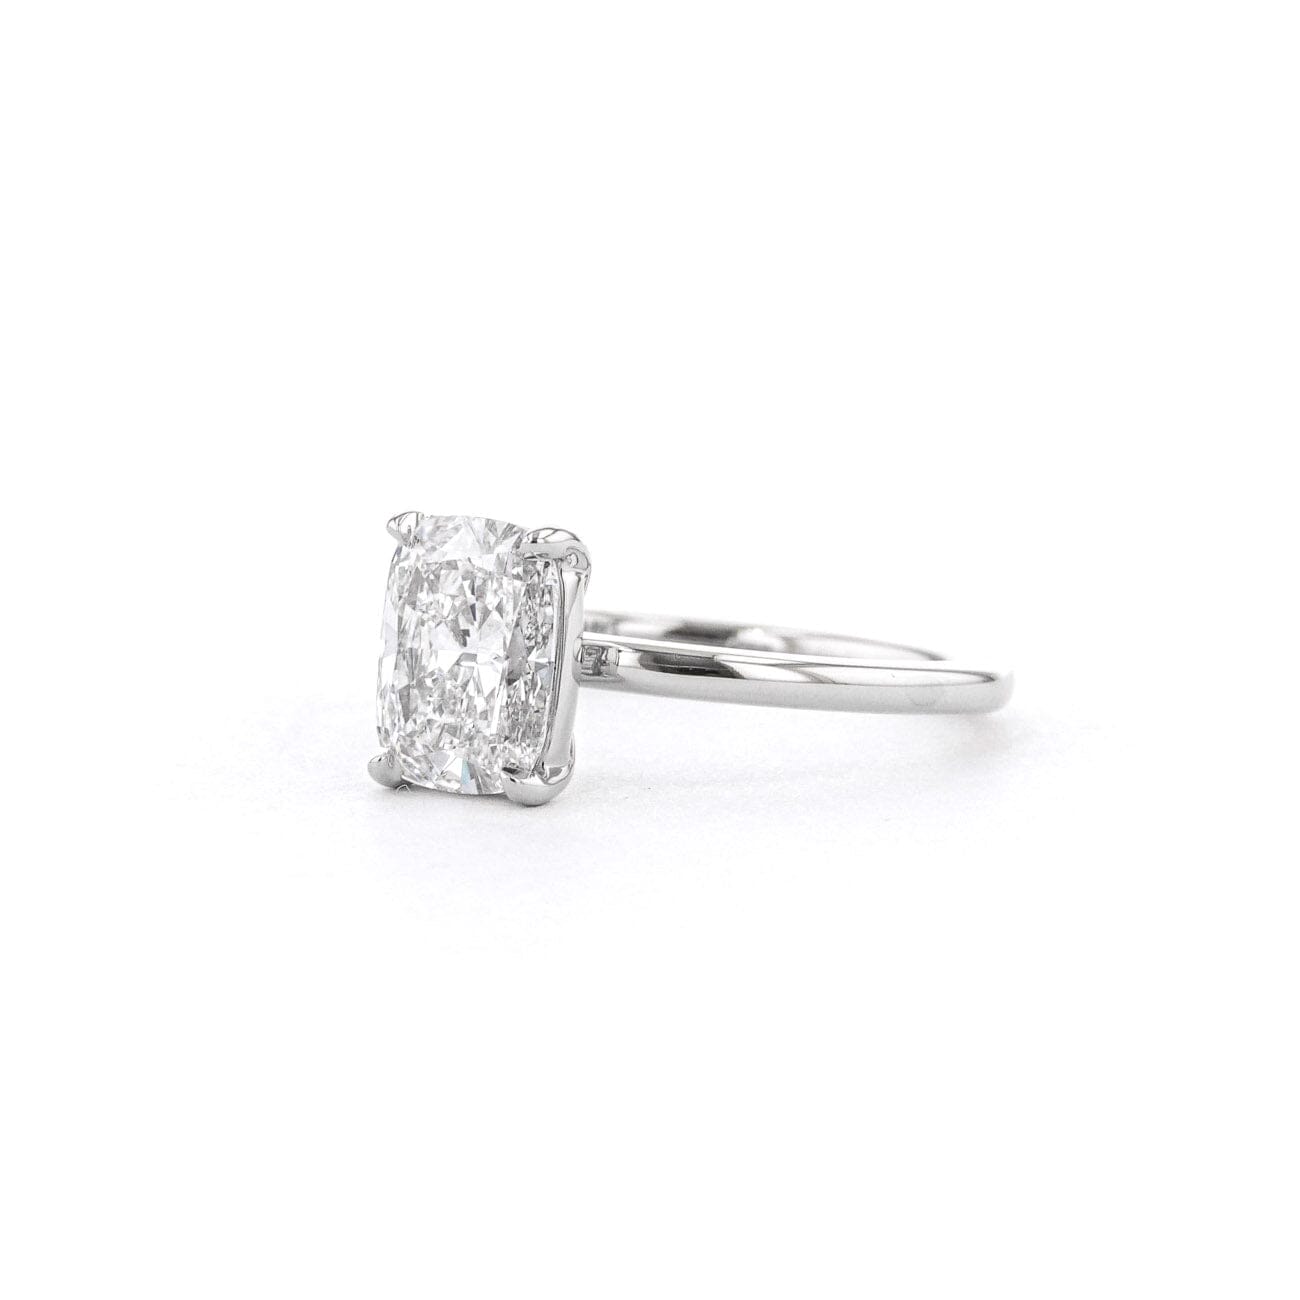 1.6mm Leah Elongated Cushion High Polish Engagement Rings Princess Bride Diamonds 